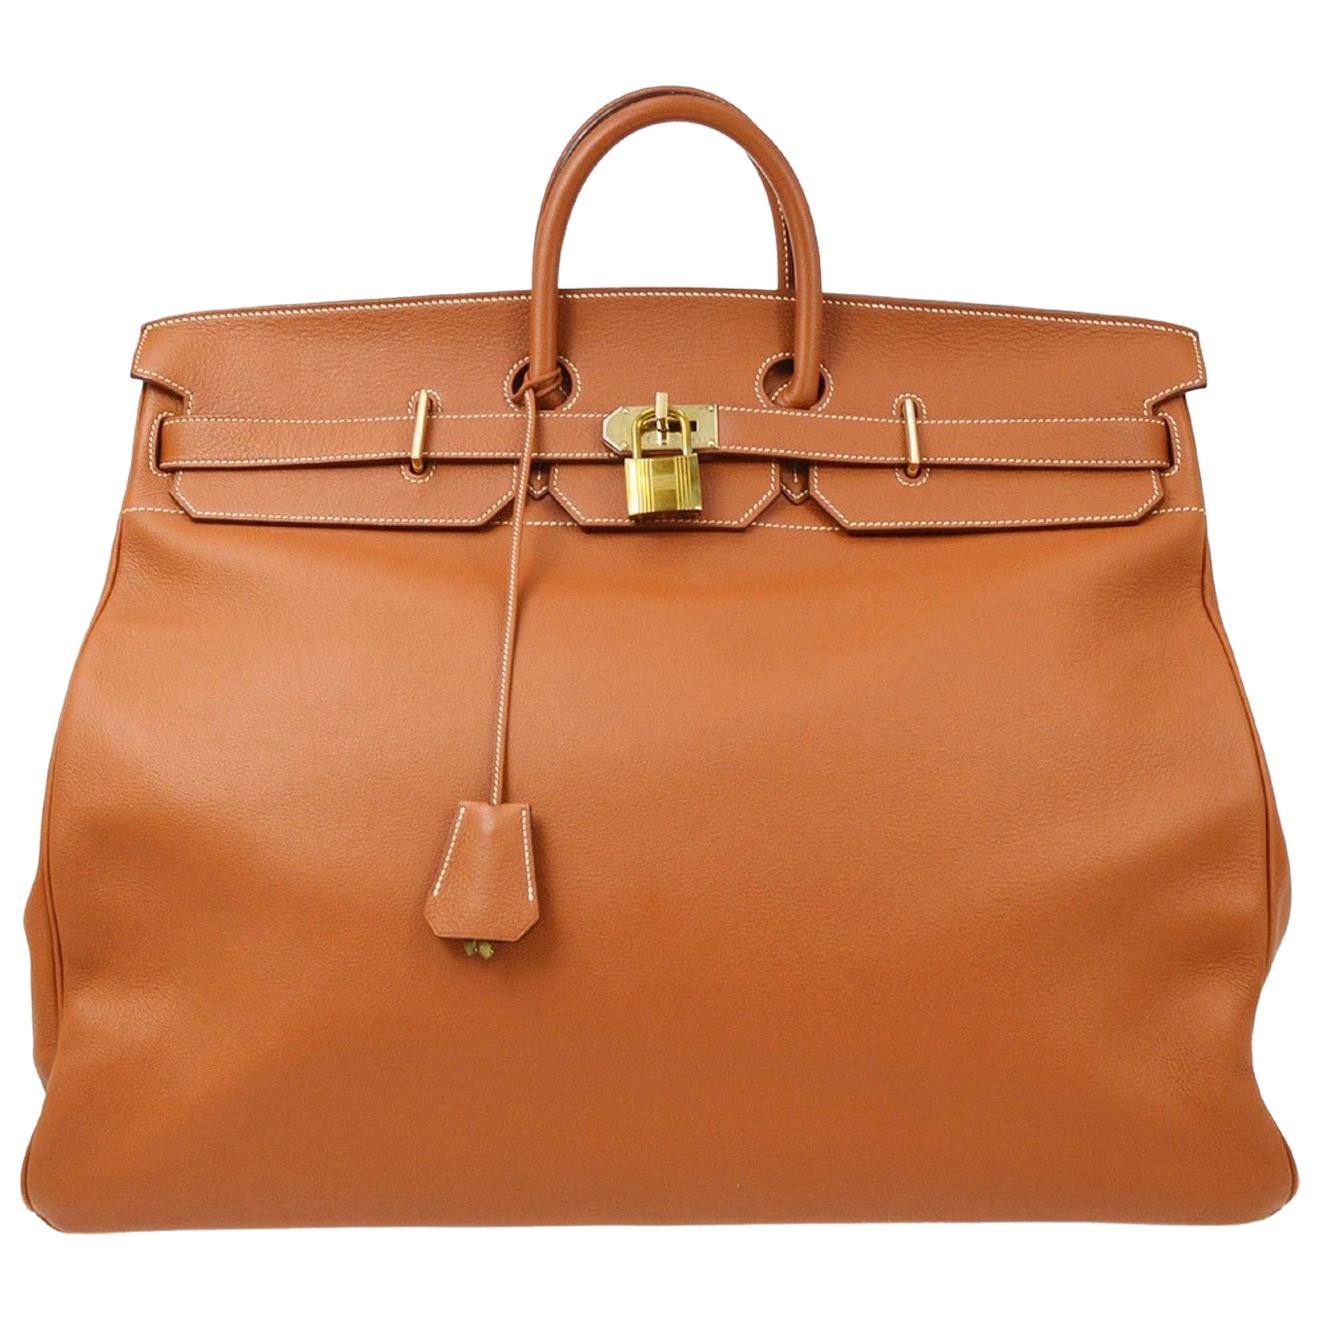 Hermes Birkin HAC 55 Cognac Leather Gold Large Men's Travel Top Handle Tote Bag